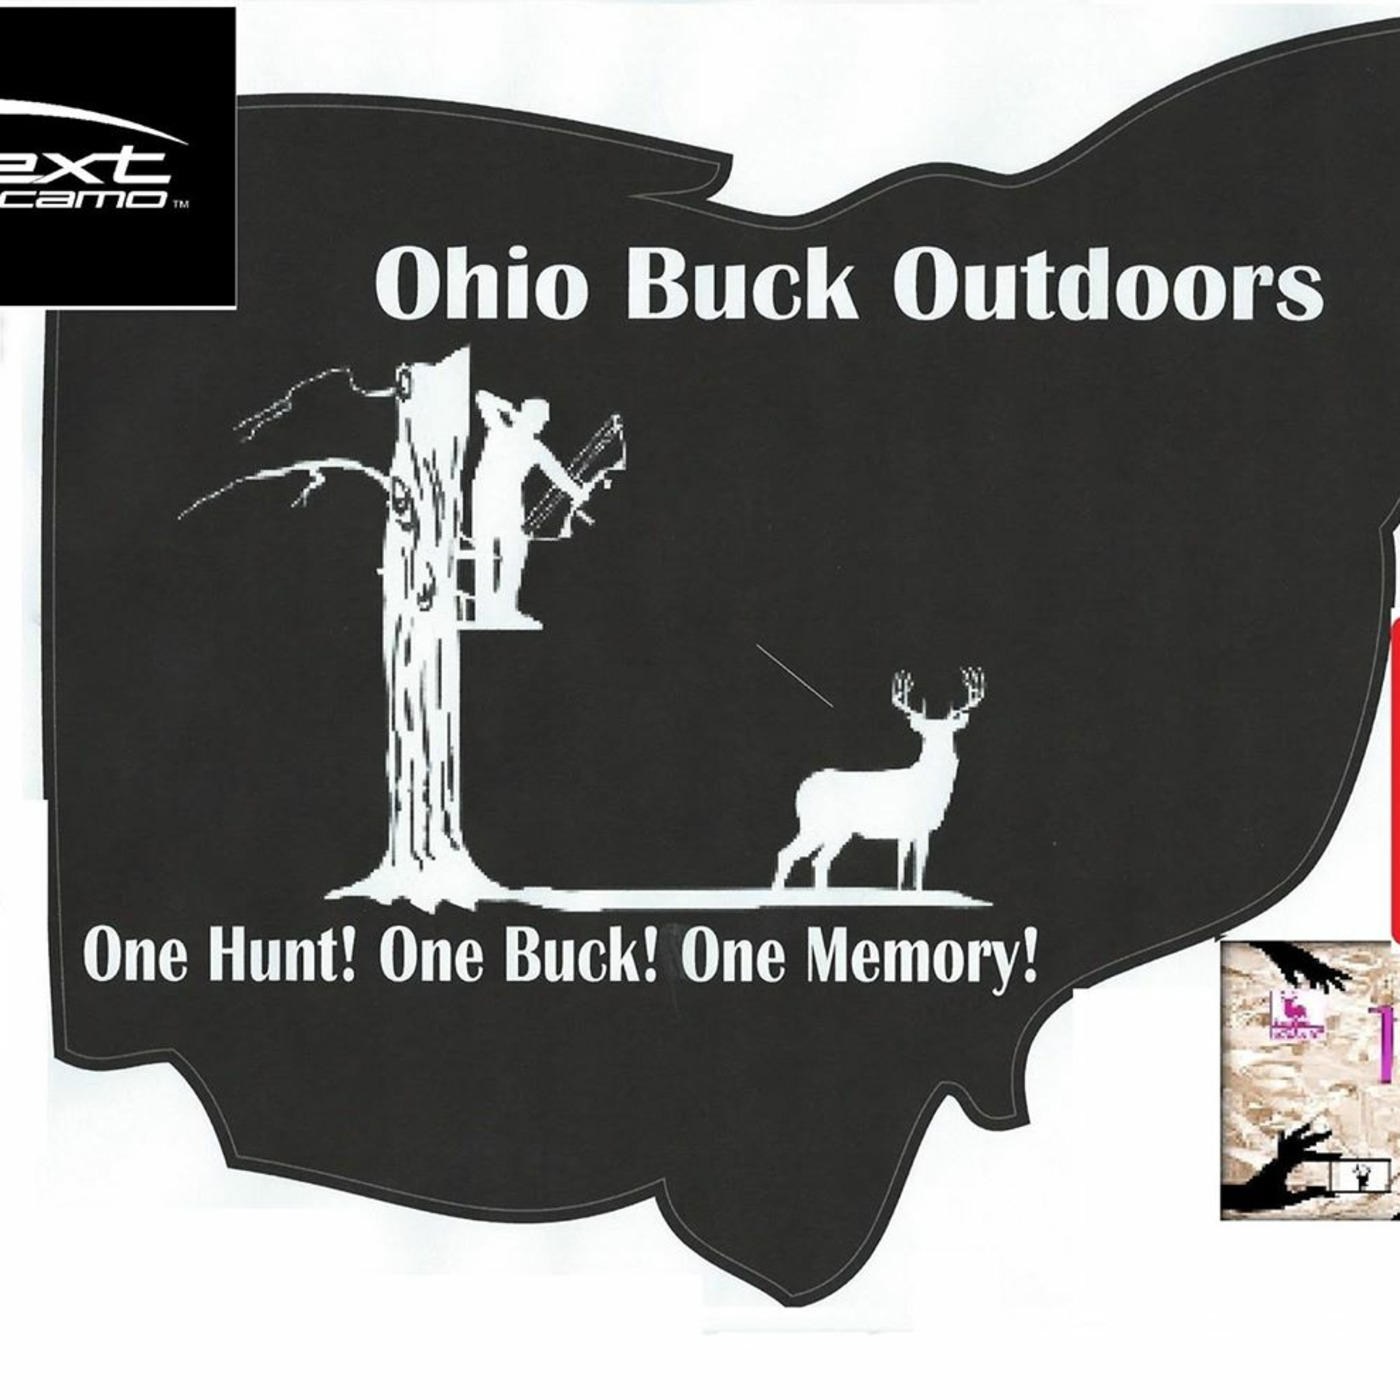 Ohio Buck Outdoors' Podcast